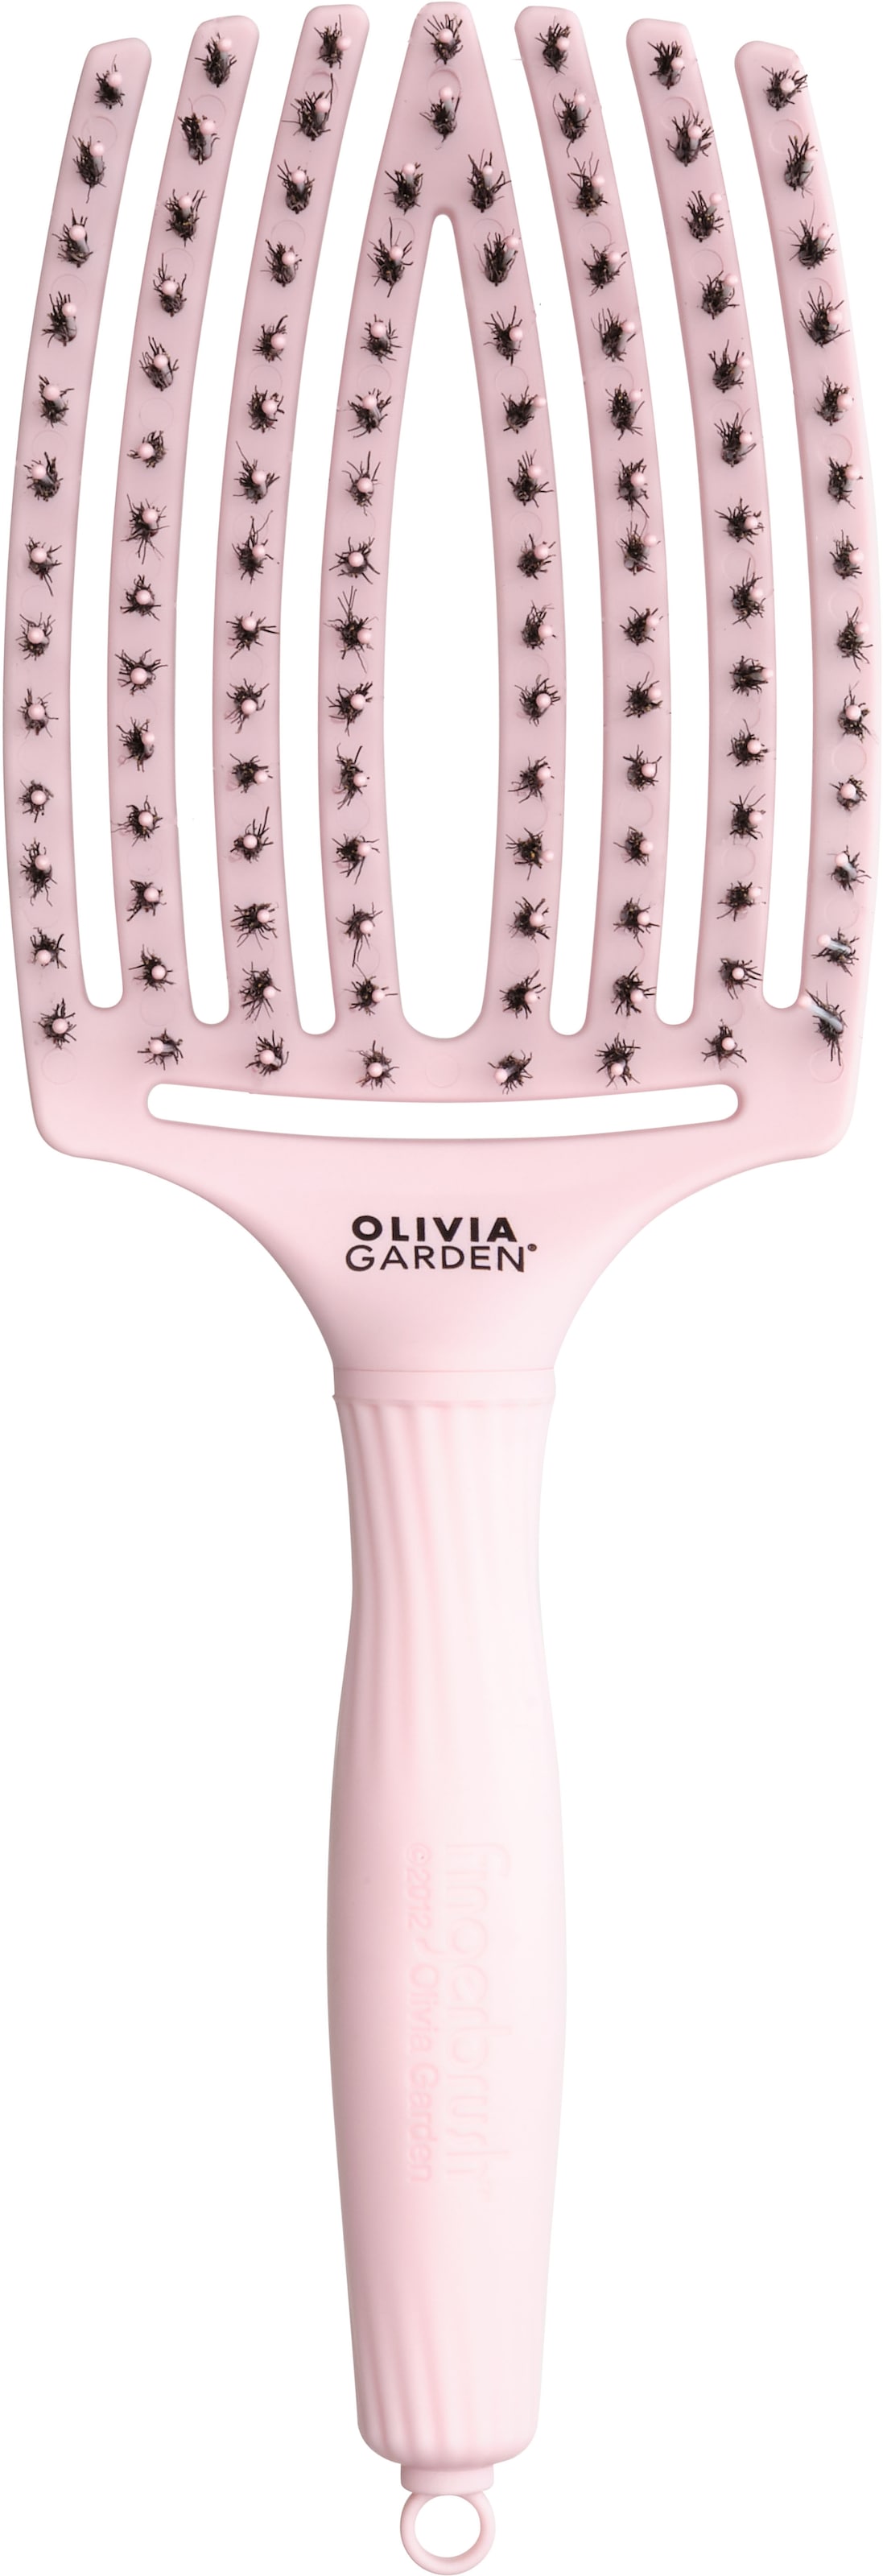 BAUR GARDEN large« Combo | Haarentwirrbürste Pink »Fingerbrush OLIVIA